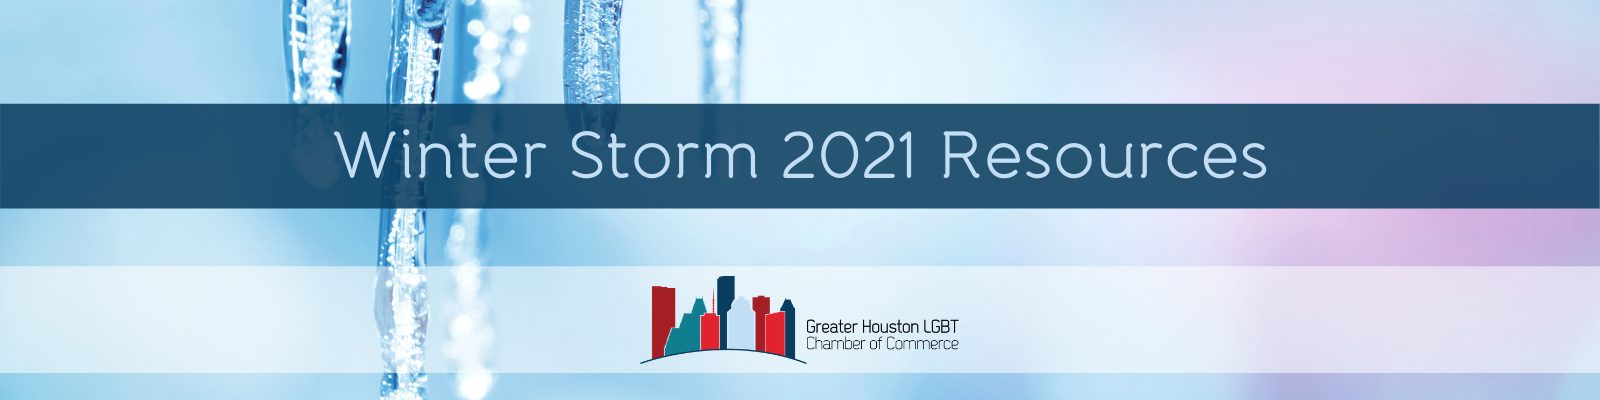 Winter Storm 2021 Resources Webpage Header-2